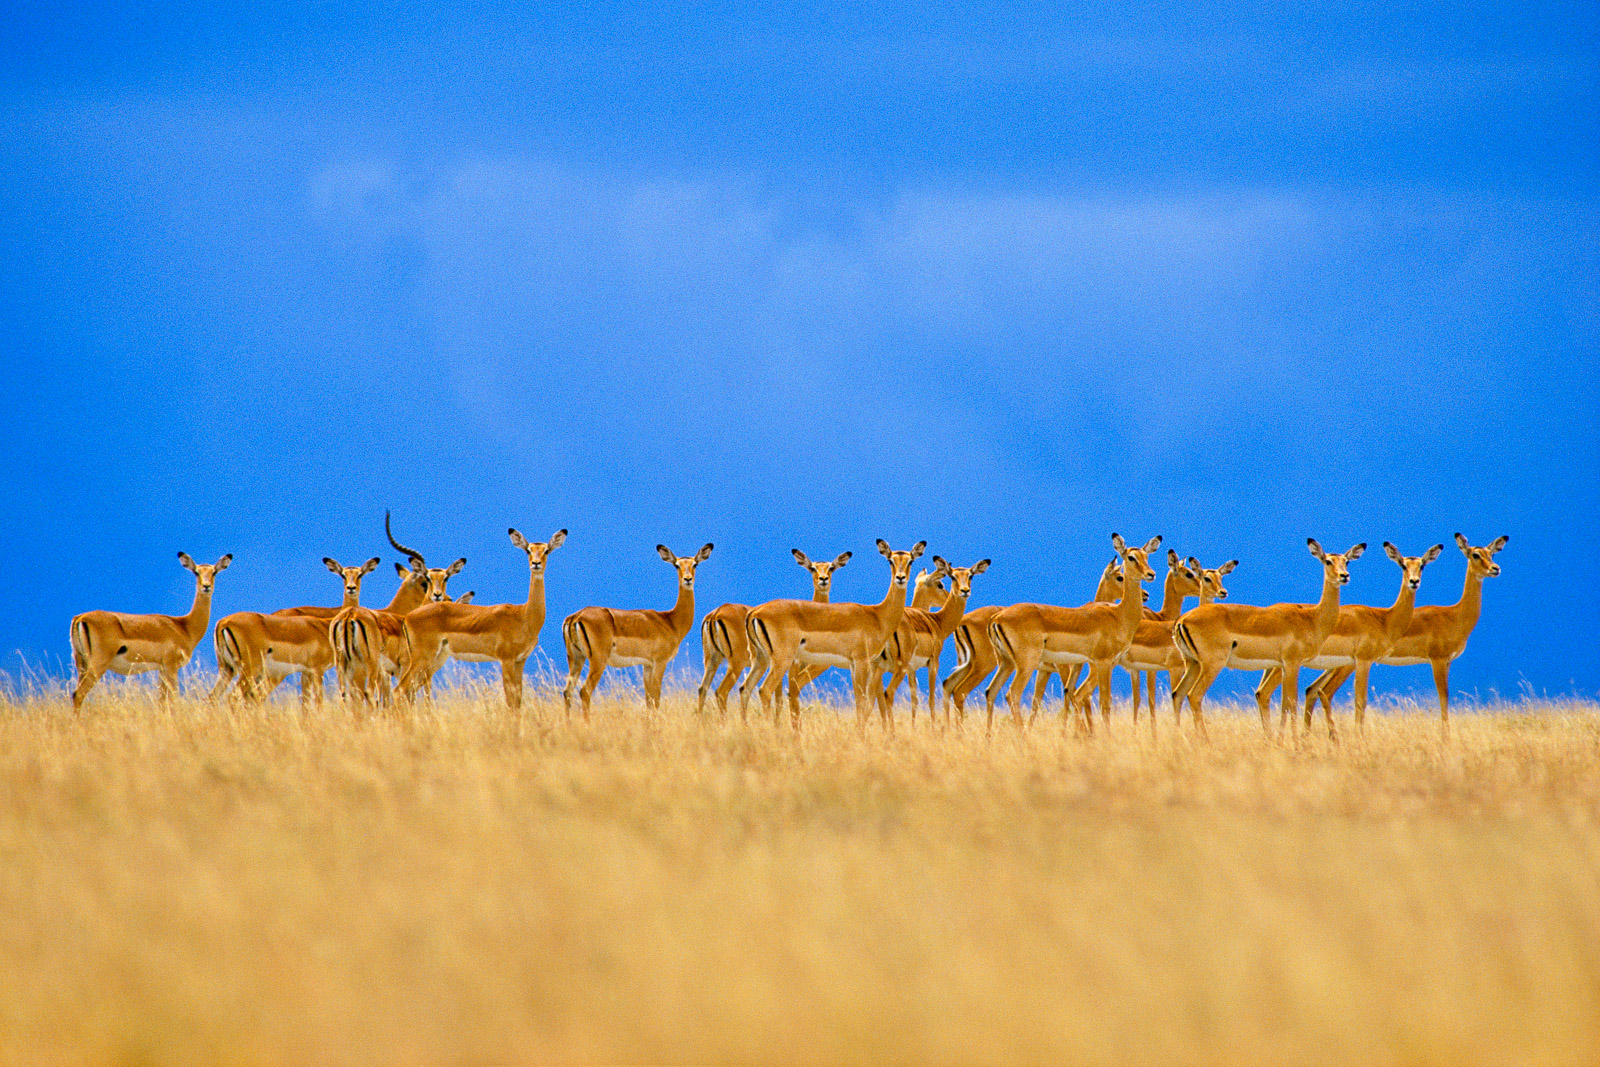 Impalas alarmed, Serengeti National Park, Tanzania